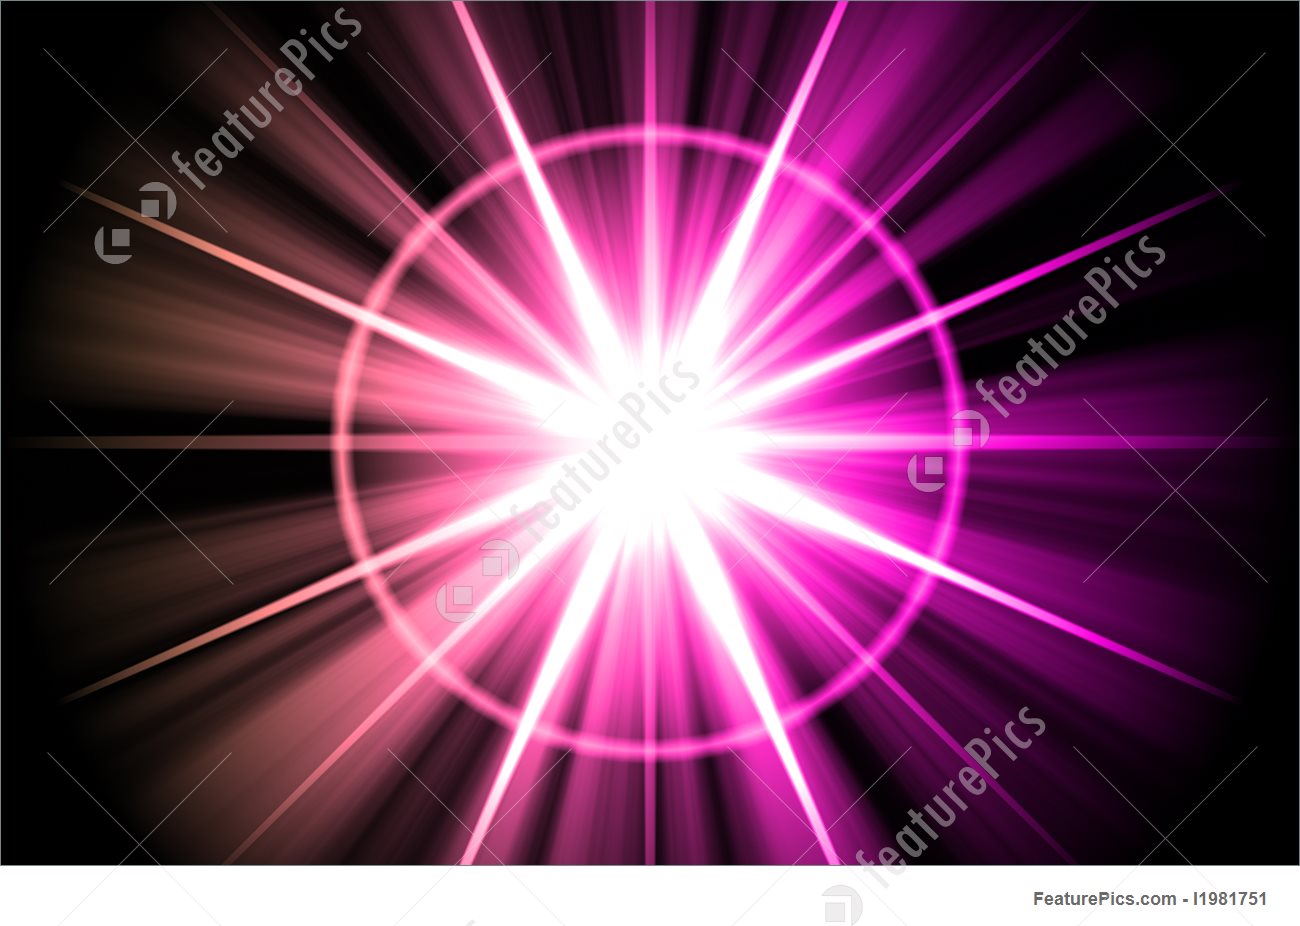 Pink Star Sunburst Abstract Background Wallpaper Texture - Abstract Star Sunburst Background - HD Wallpaper 